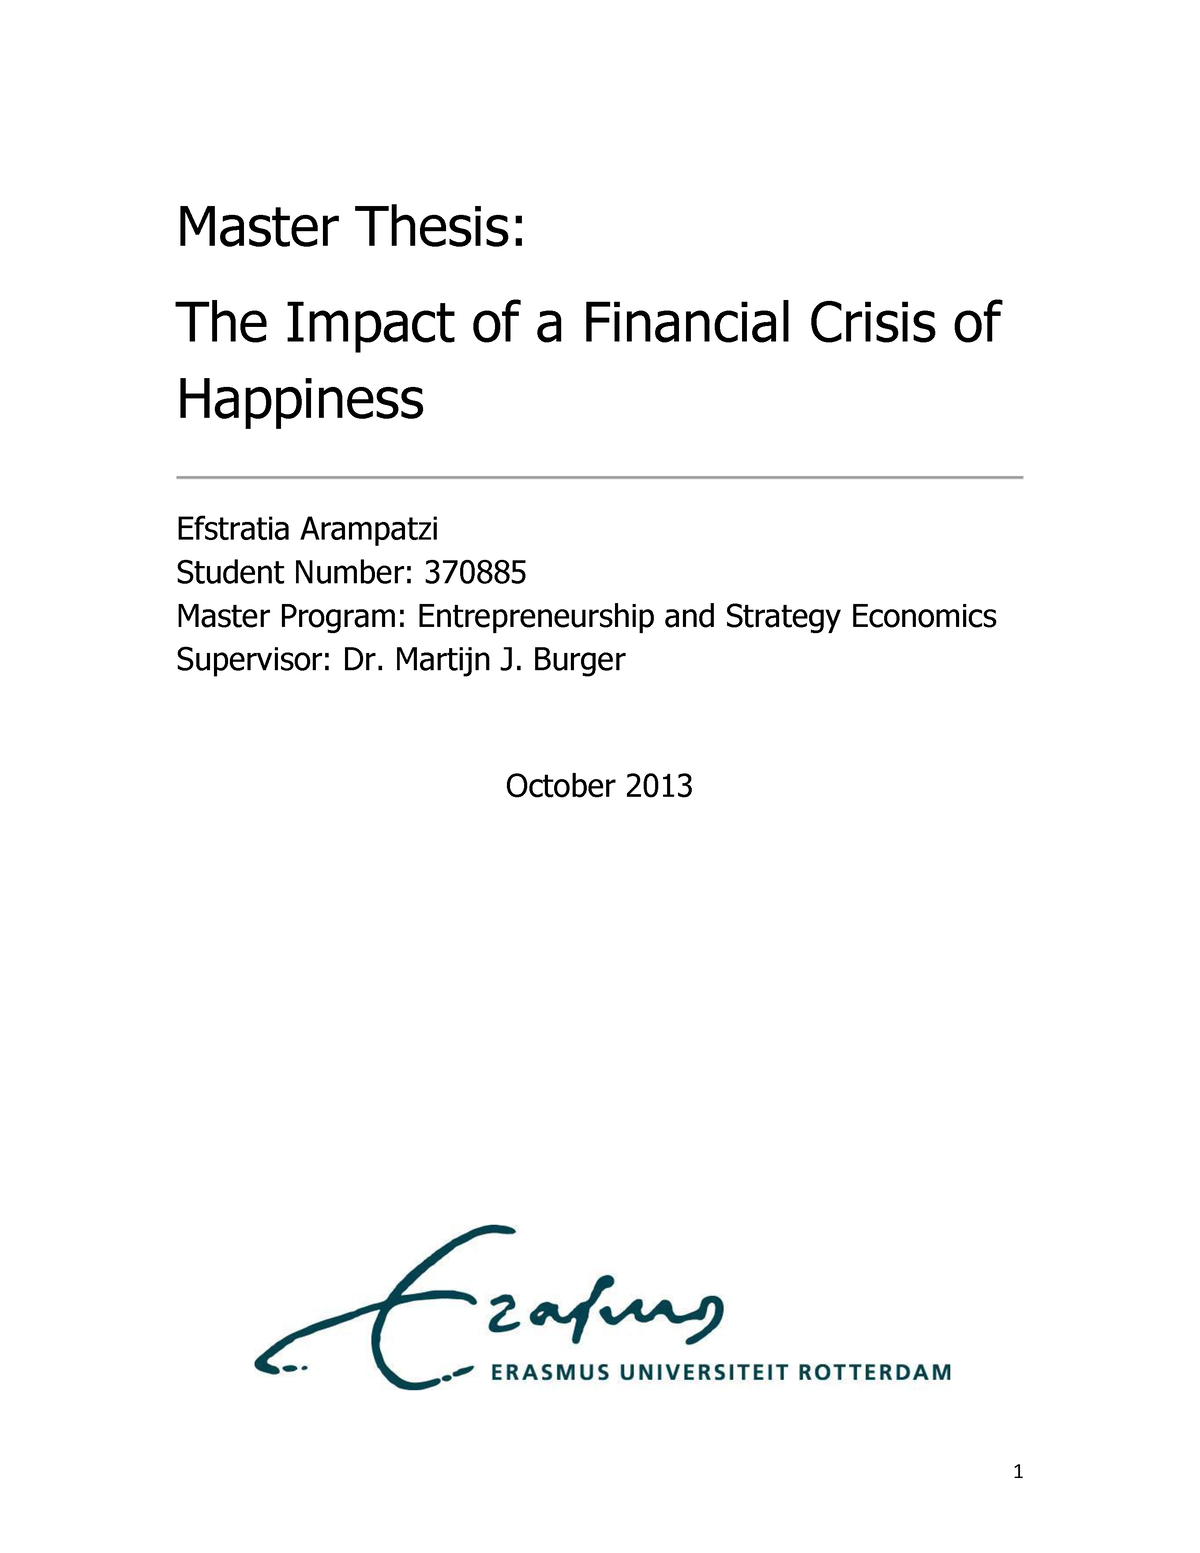 financial crisis master thesis